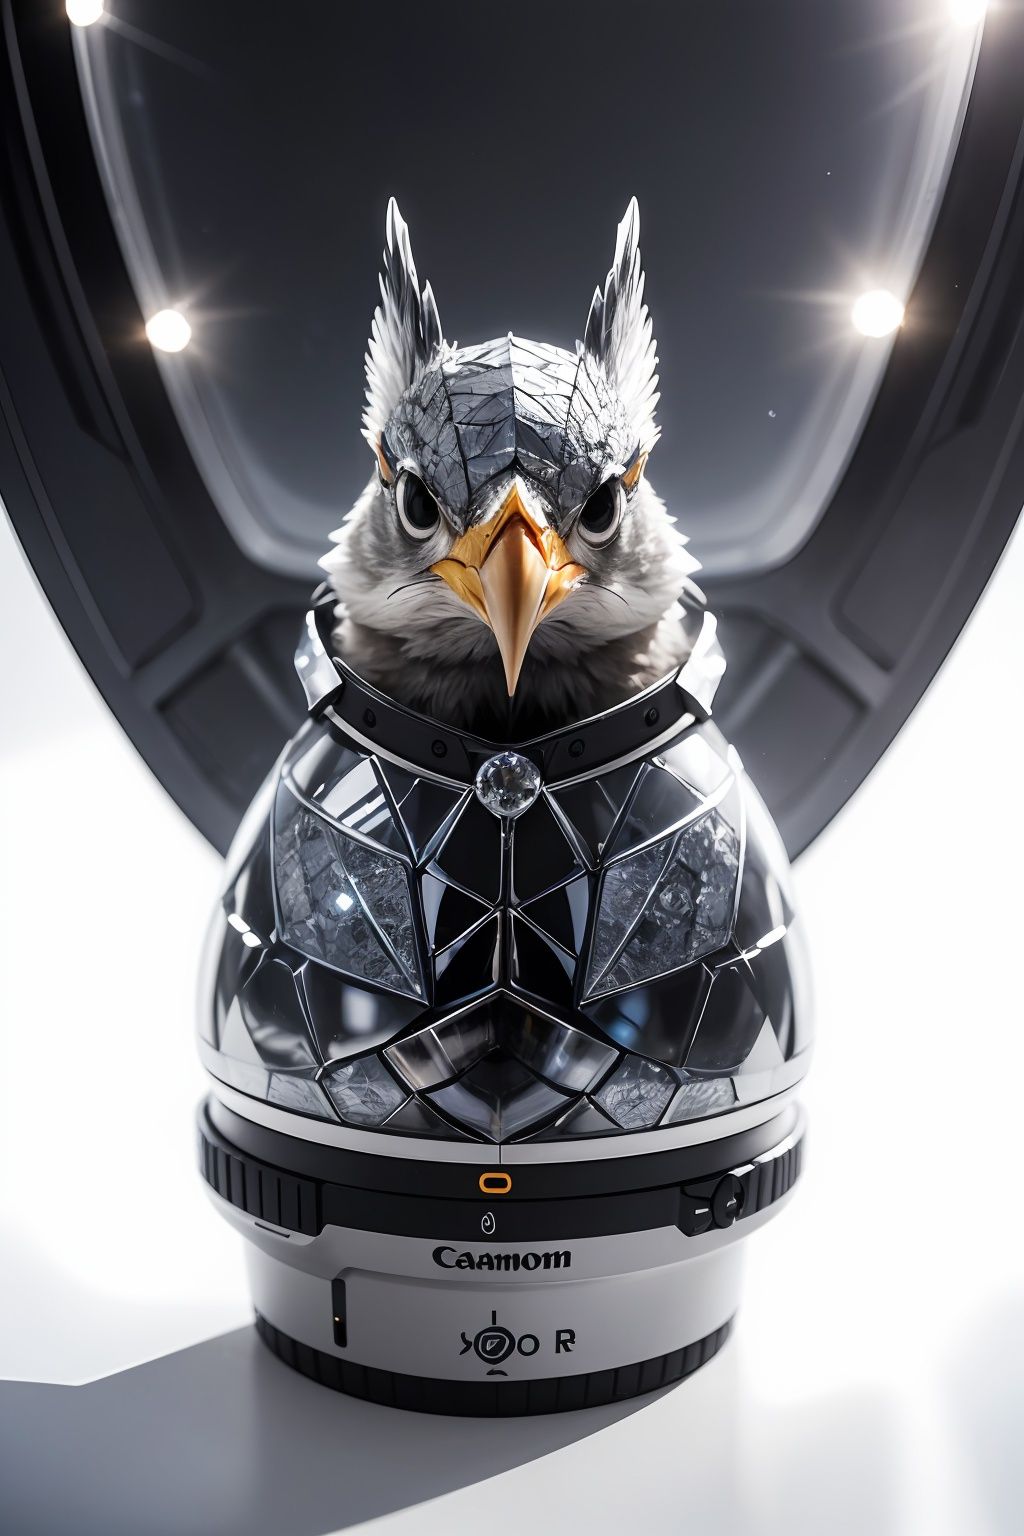 a diamond armor bird, translucent, high quality photography, 3 point lighting, flash with softbox, 4k, Canon EOS R3, hdr, smooth, sharp focus, high resolution, award winning photo, 80mm, f2.8, bokeh